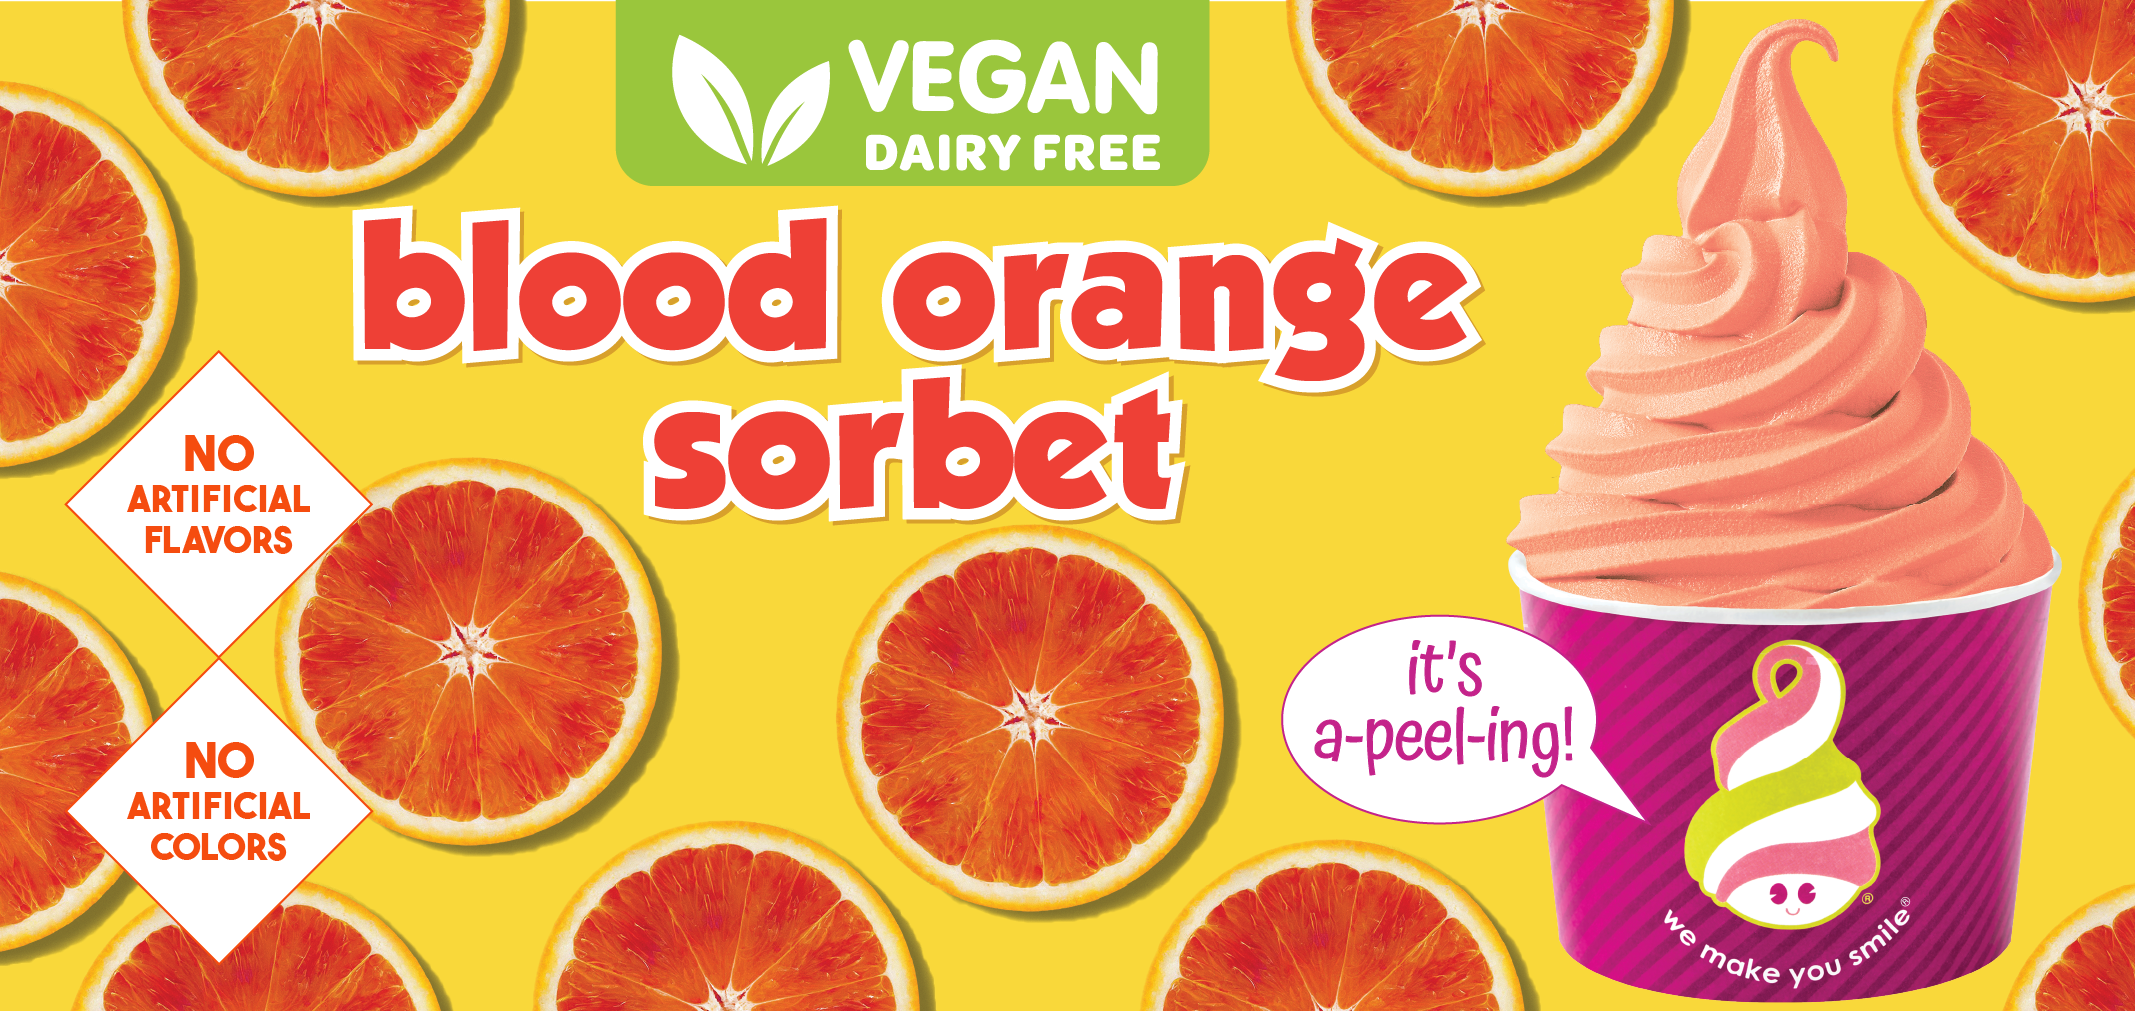 Vegan Blood Orange Sorbet label image